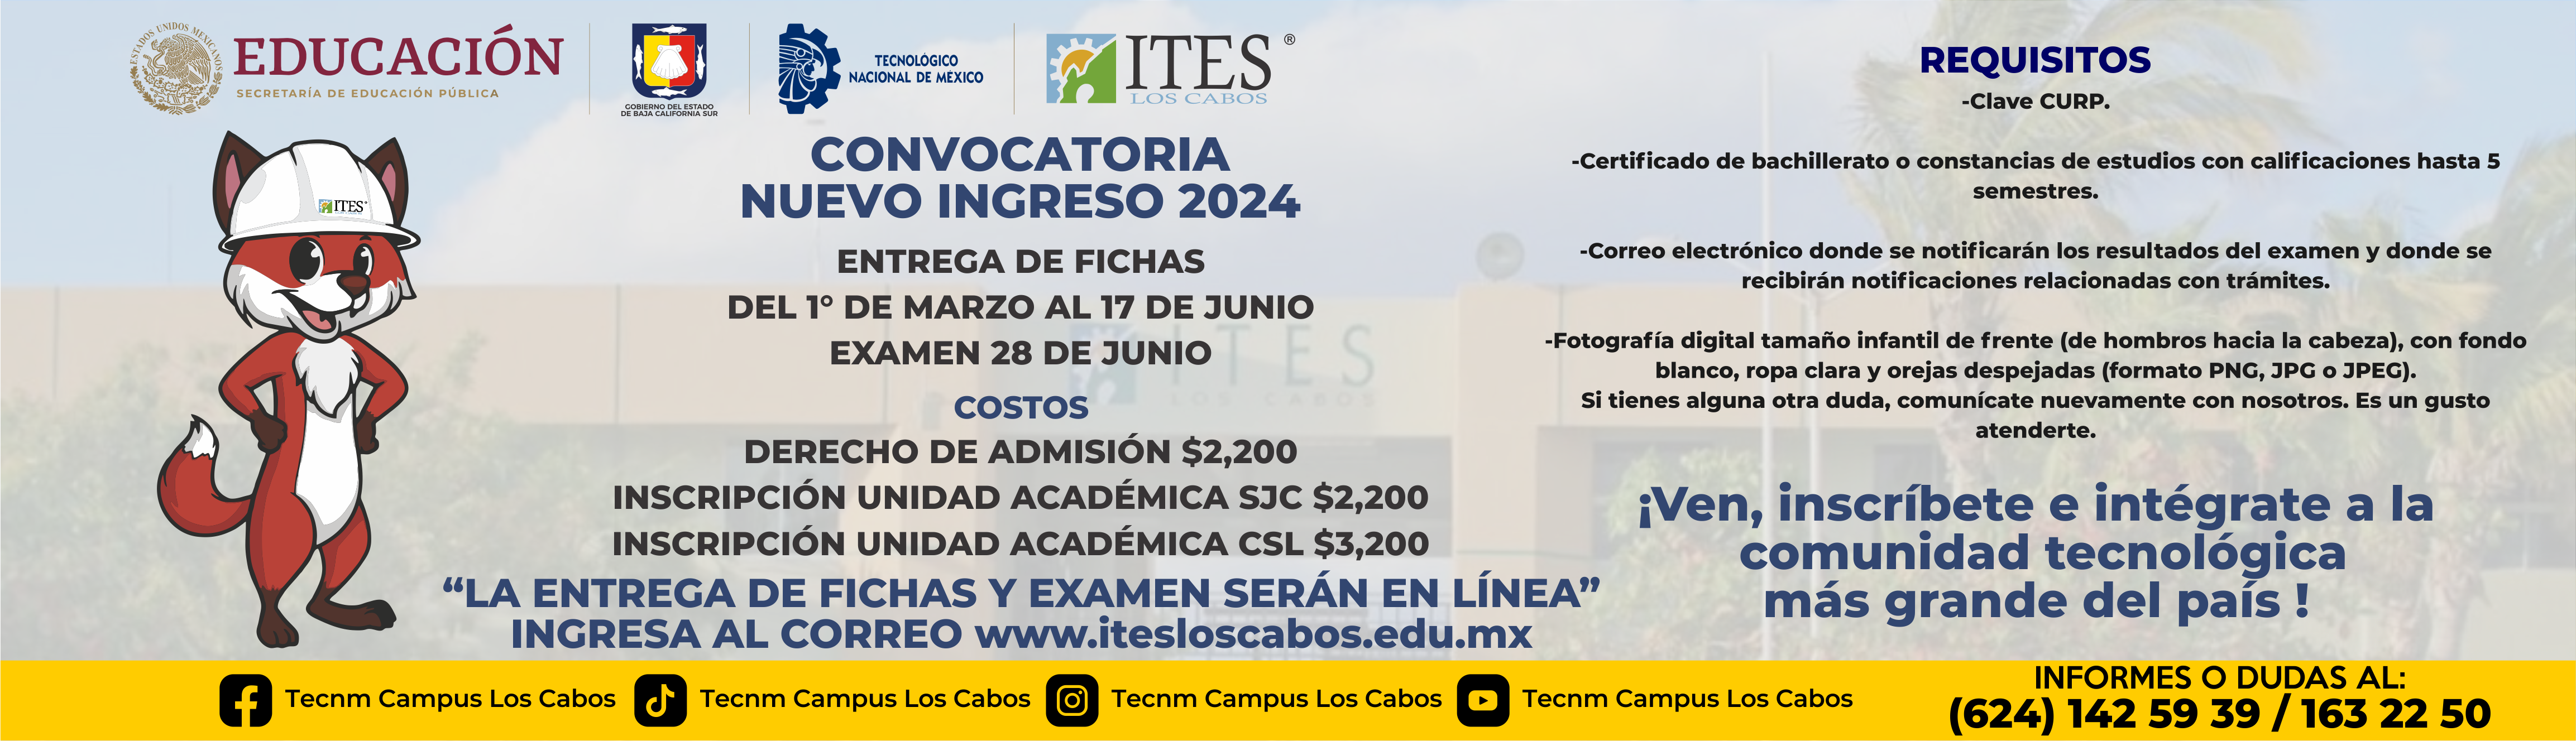 (c) Itesloscabos.edu.mx